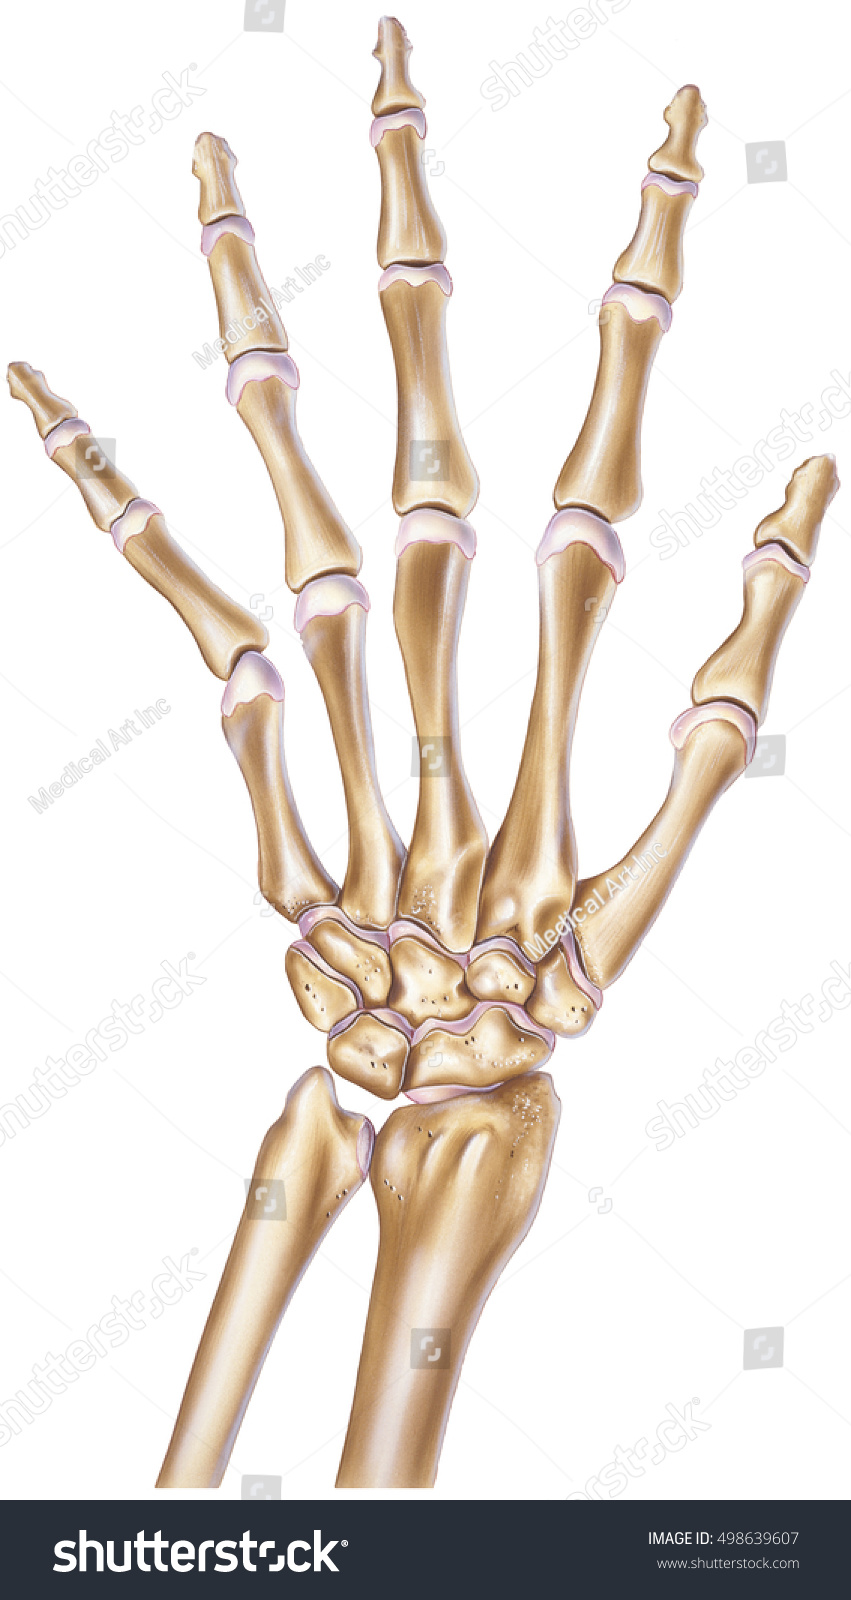 Hand Normal Bones Joints Stock Illustration 498639607 - Shutterstock